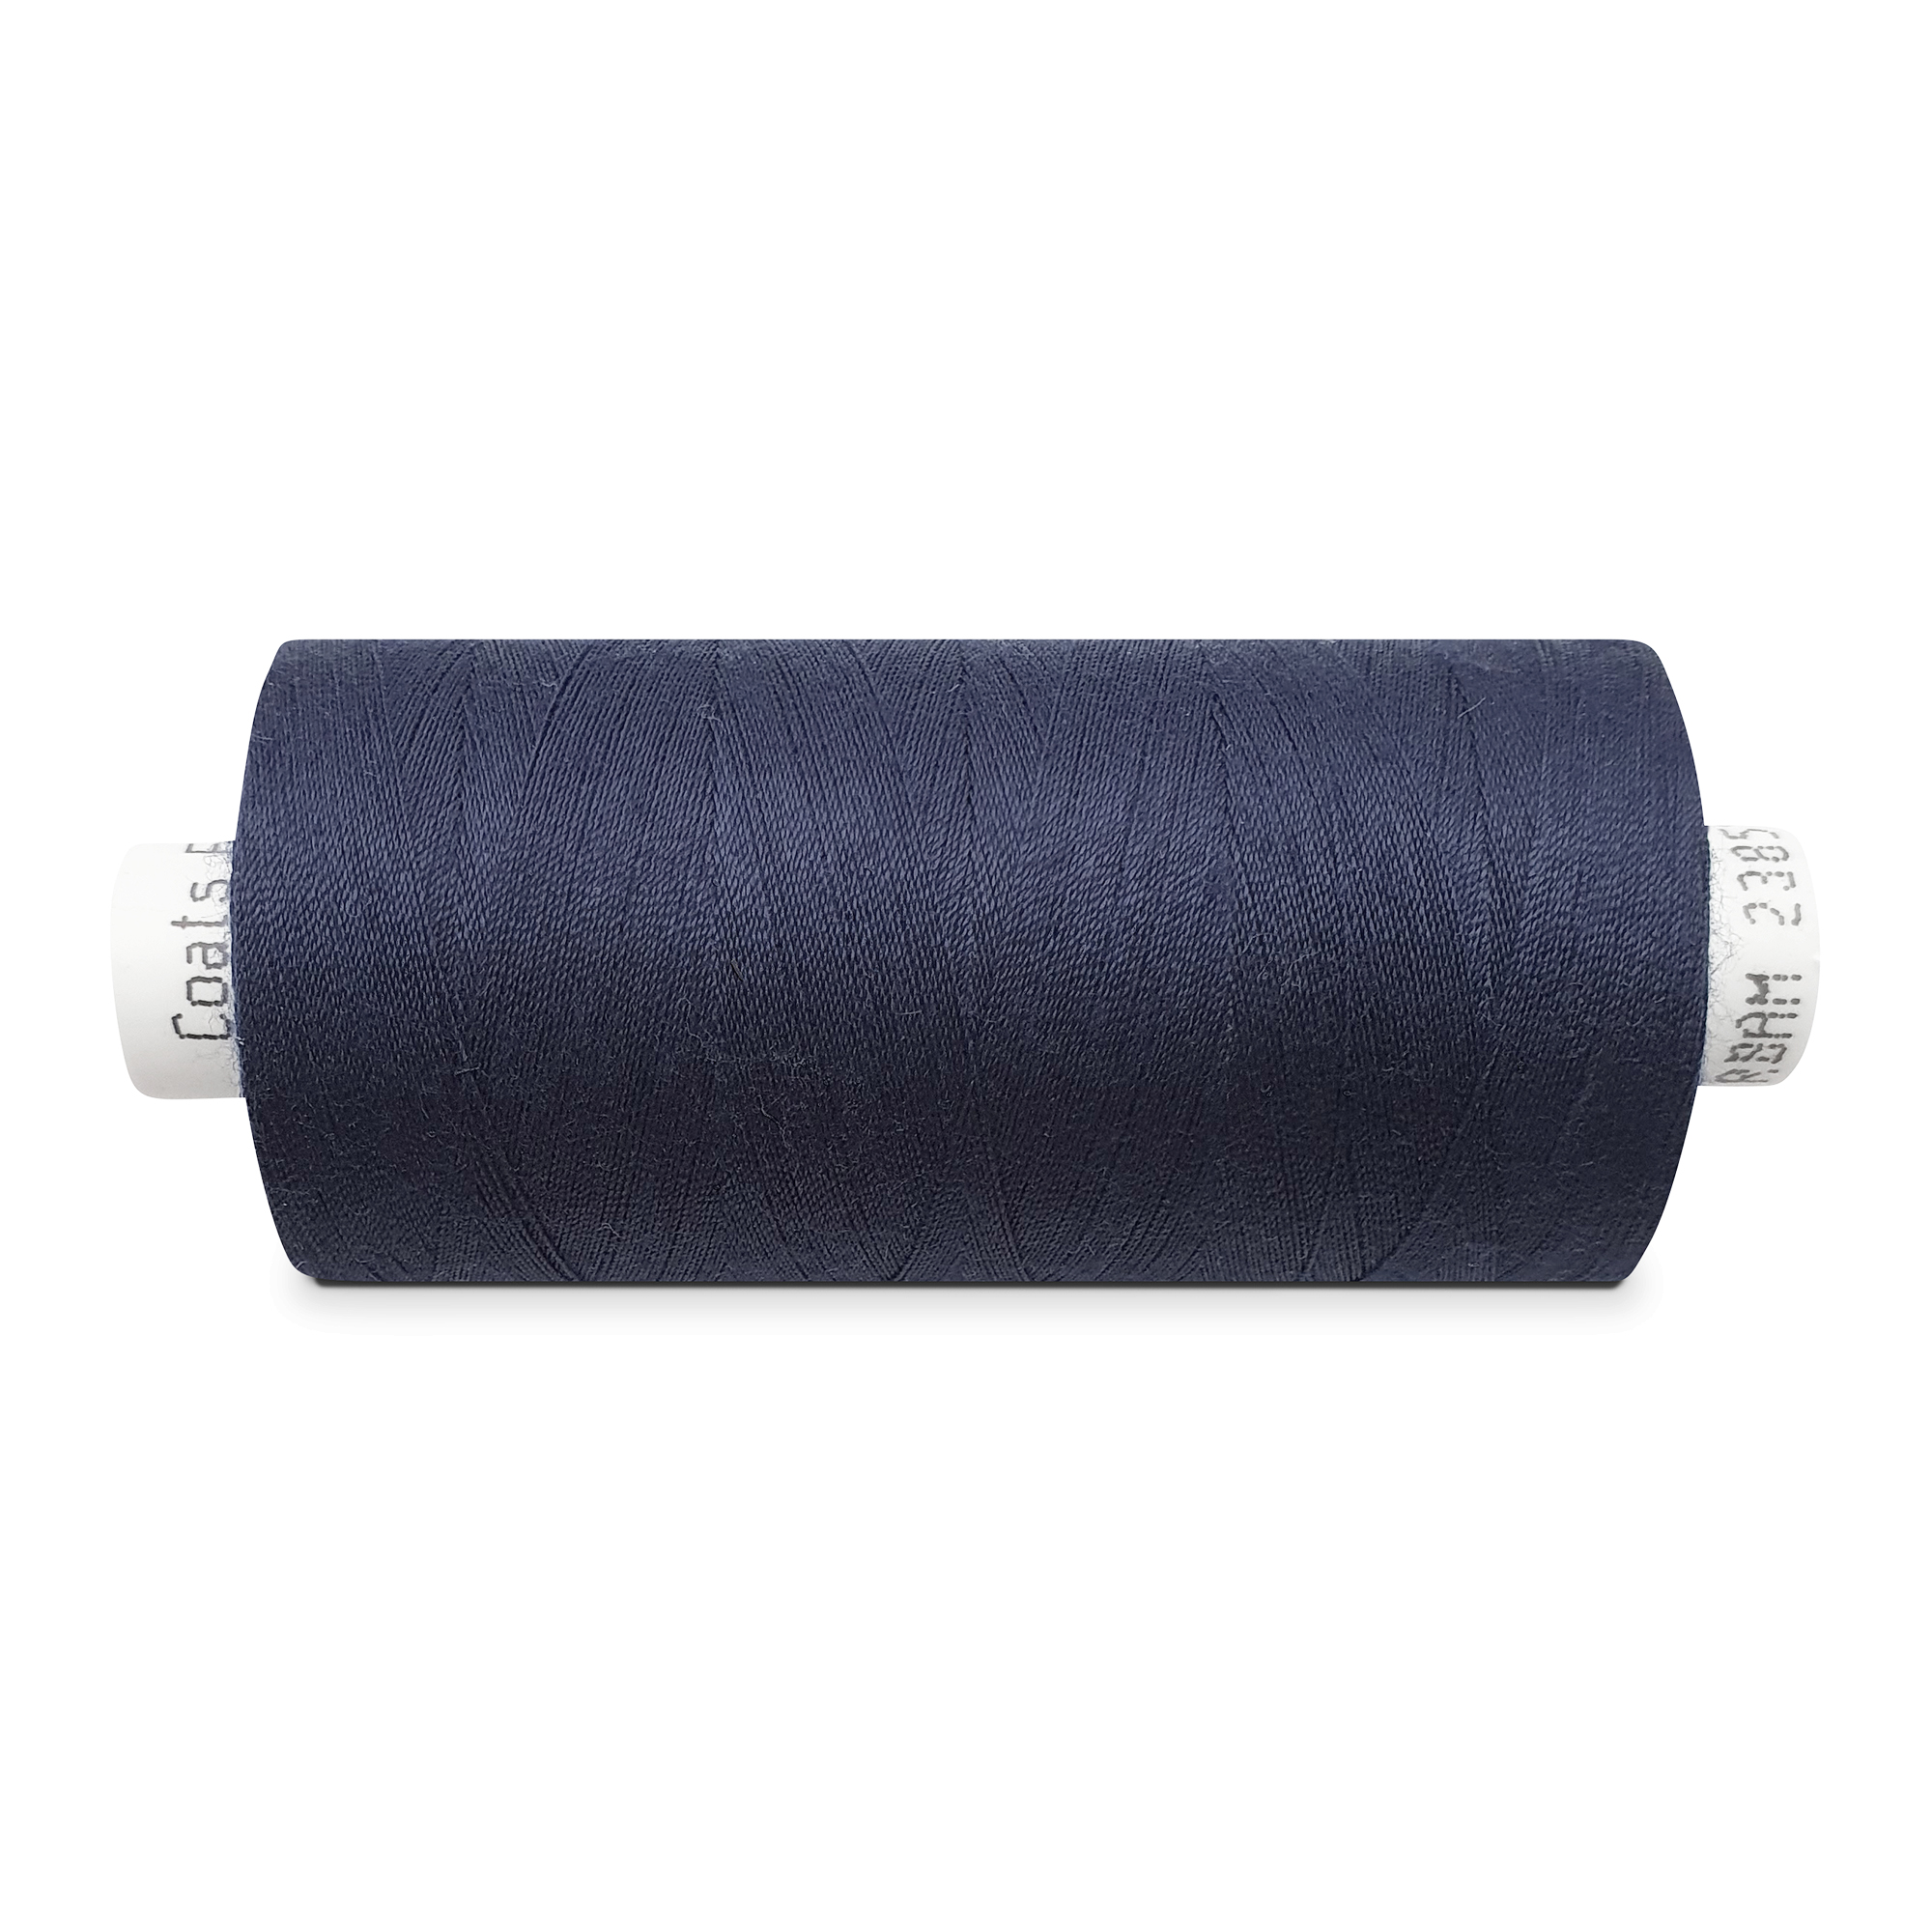 Jeansgarn dunkelblau 500m No50, 60Fb, Epic/Coats Markengarn, hochfester Polyesterfilament-Kernzwirn